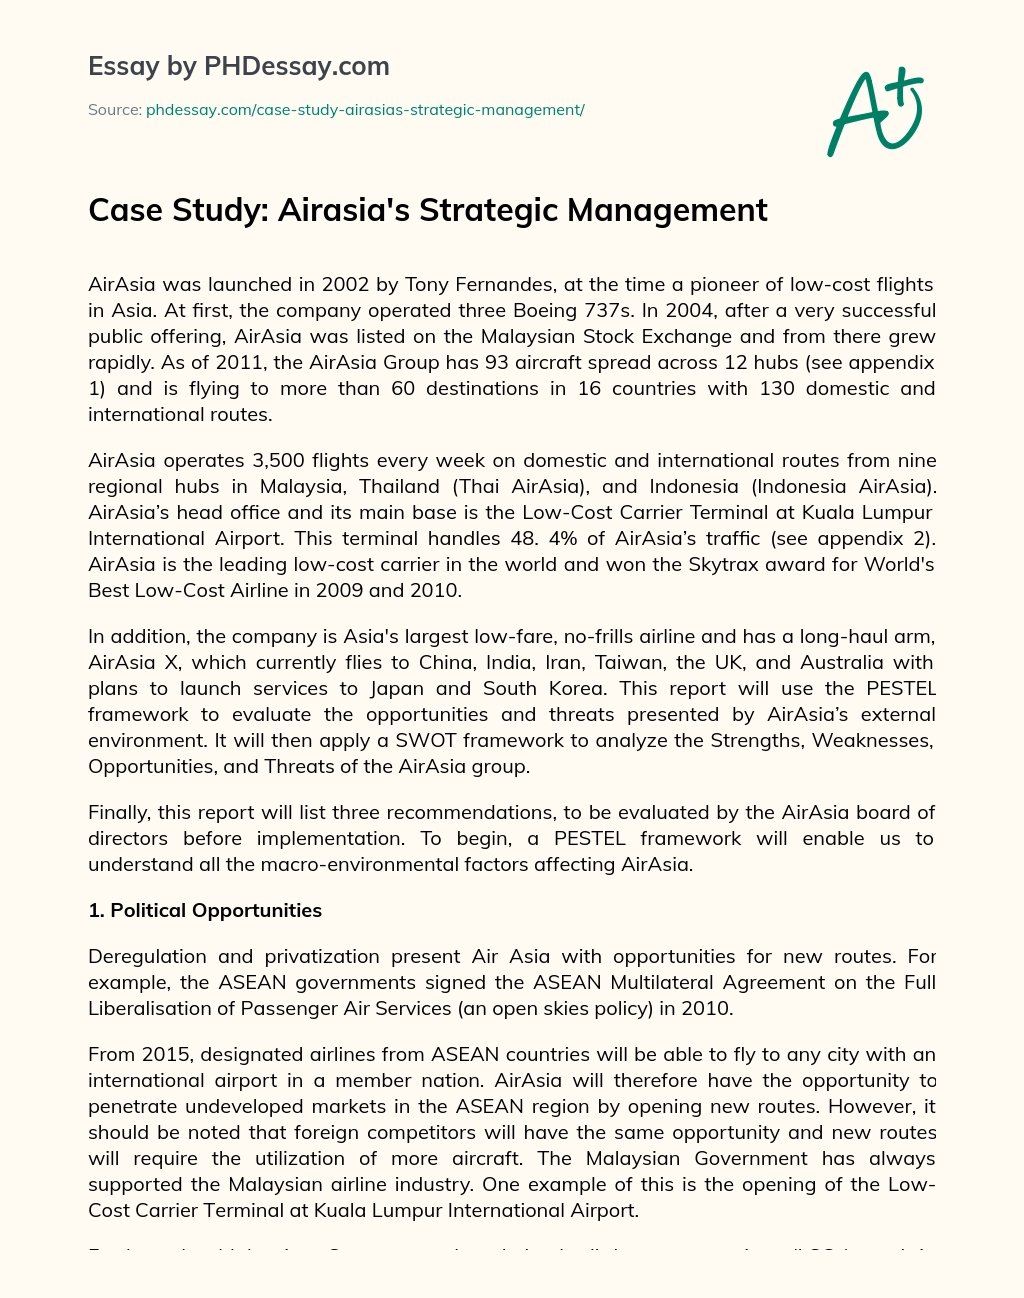 airasia strategic management case study